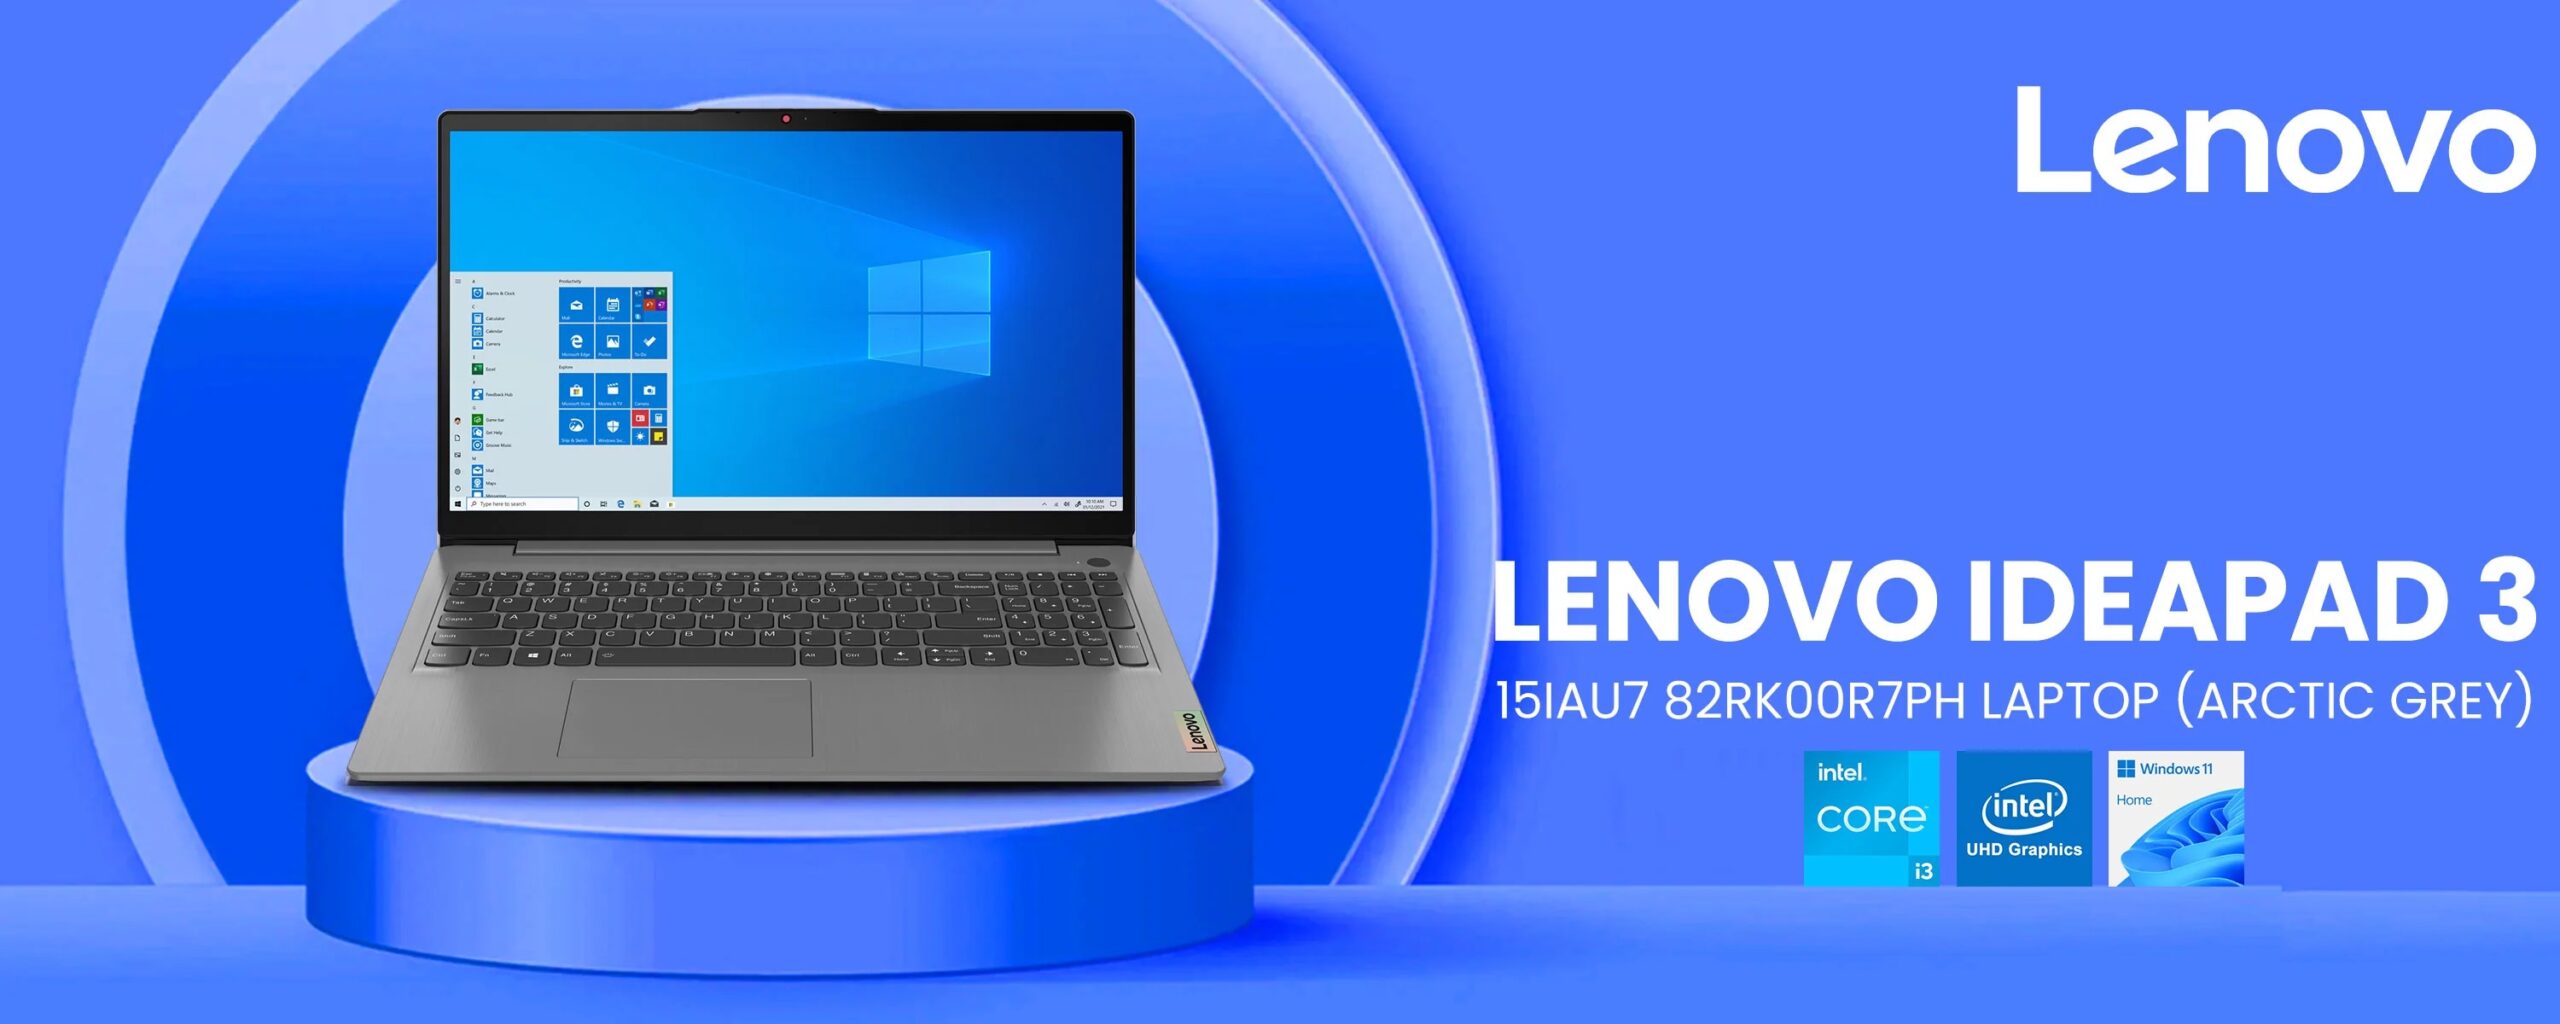 Lenovo-Ideapad-3-15IAU7-82RK00R7PH-Laptop-Product-Description